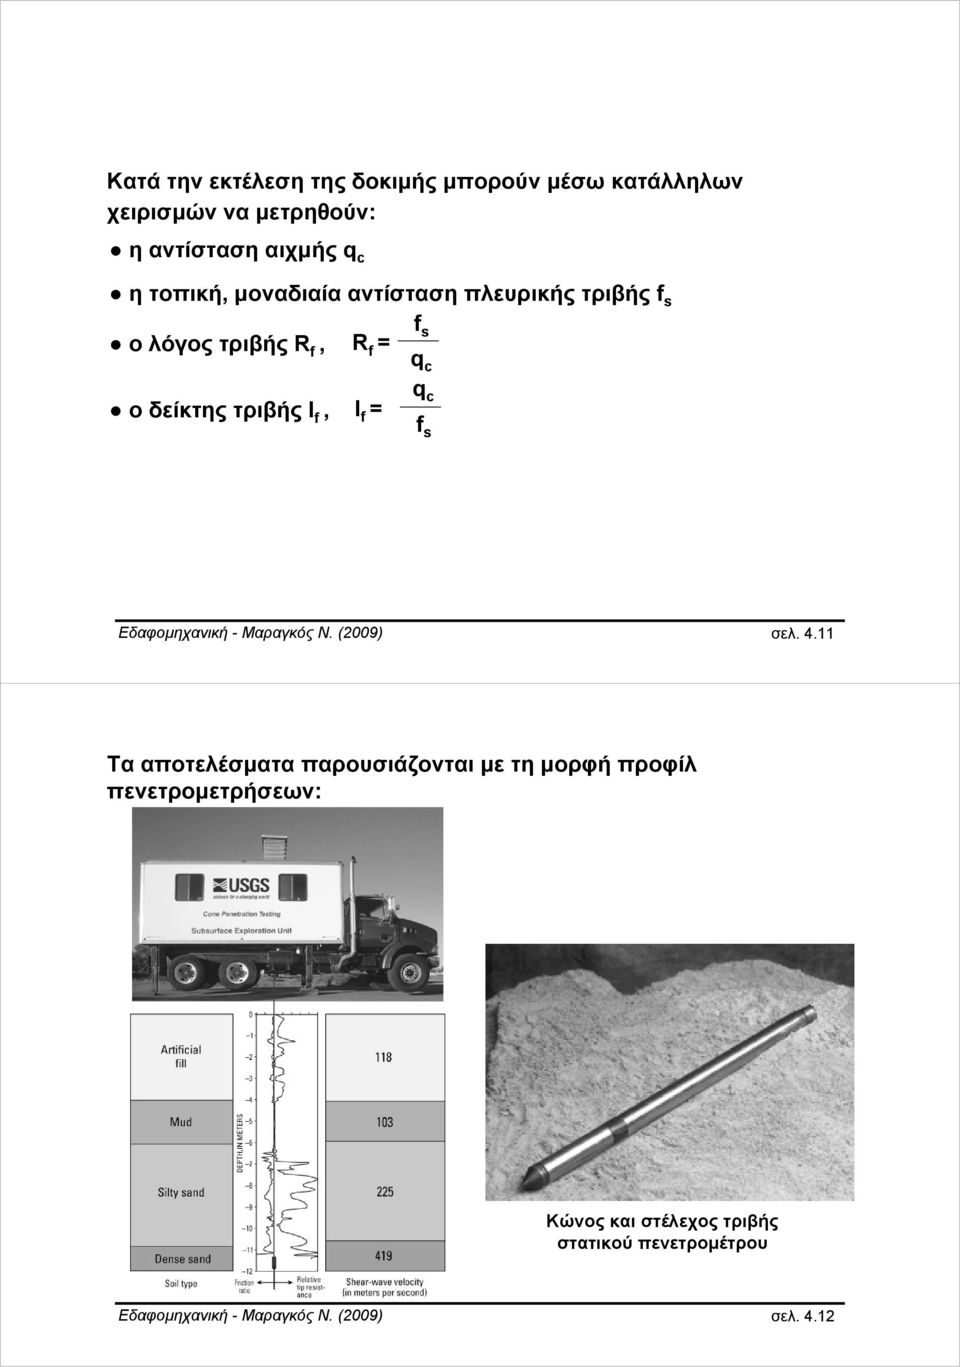 c q c f s Εδαφομηχανική - Μαραγκός Ν. (2009) σελ. 4.